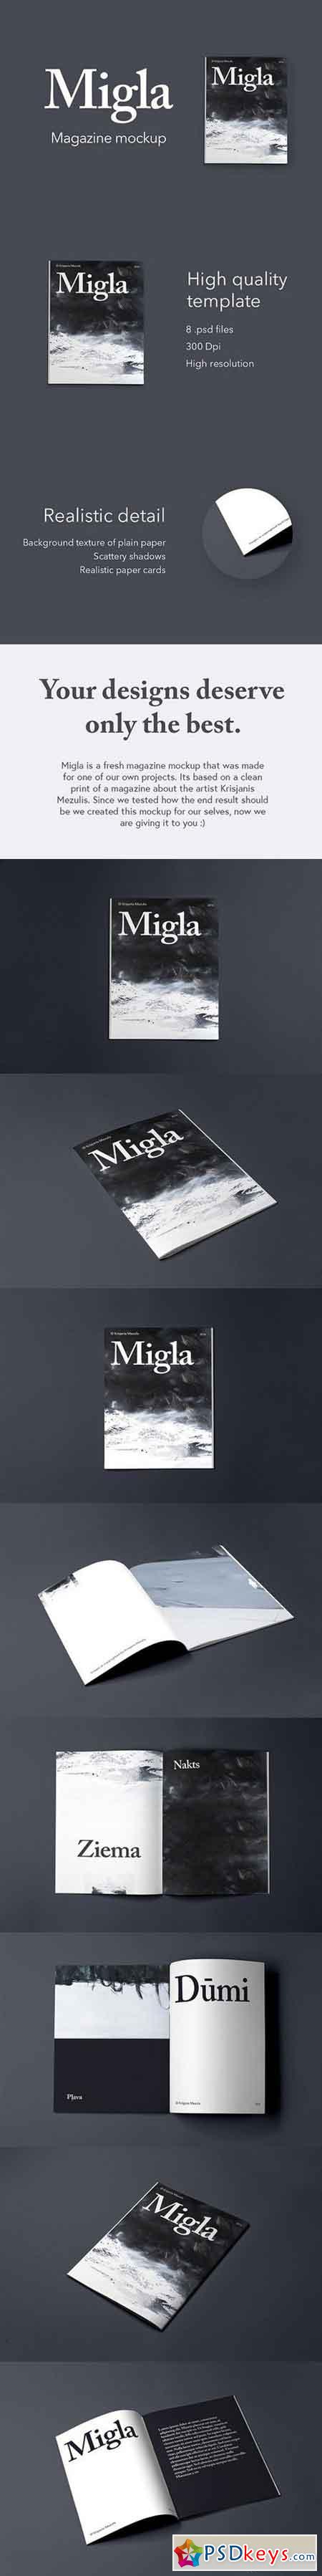 Migla Print Magazine Mockup 829708